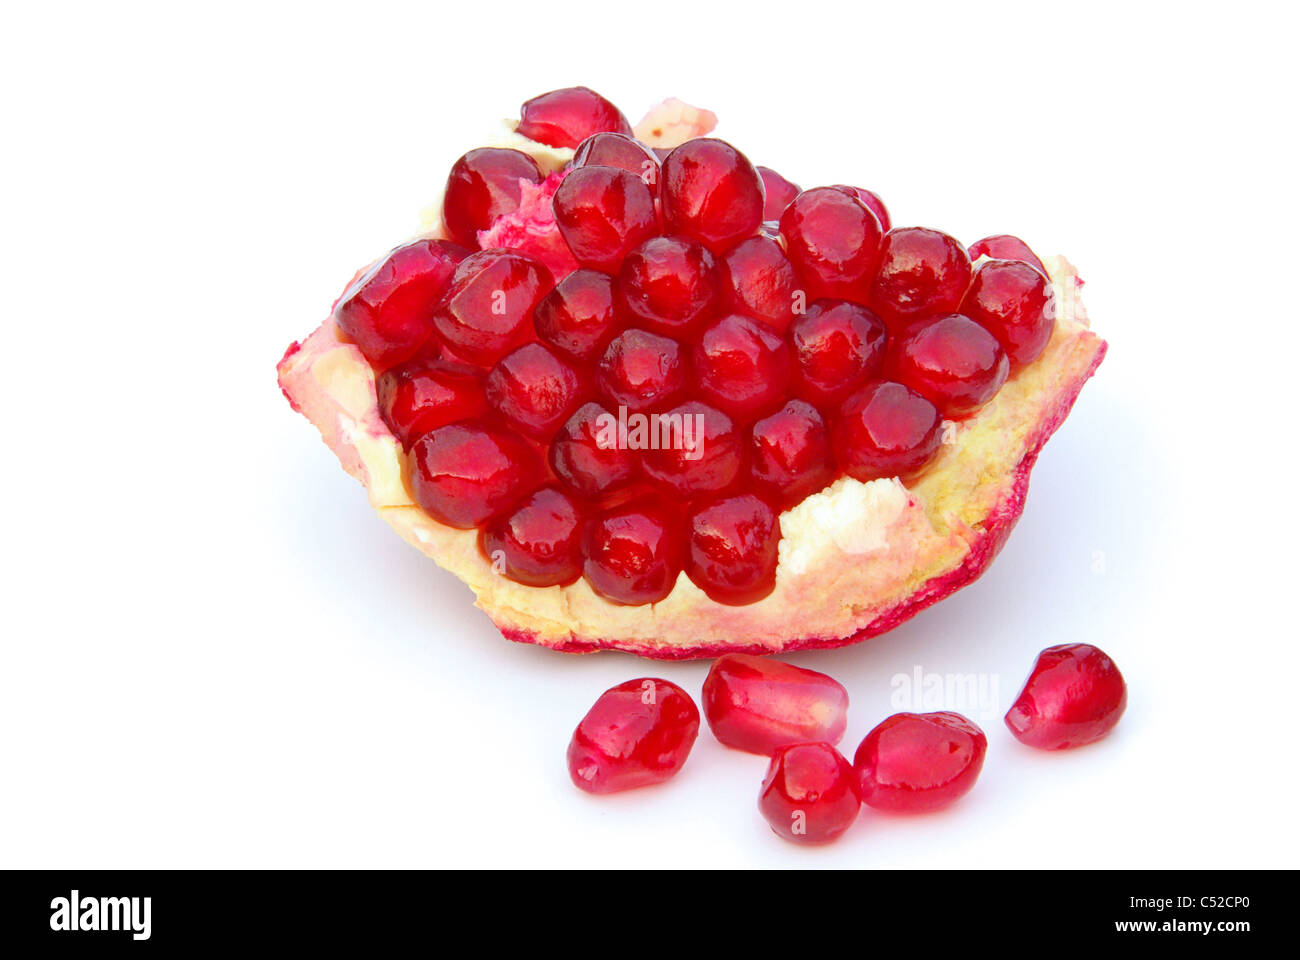 Granatapfel freigestellt - pomegranate isolated 04 Stock Photo